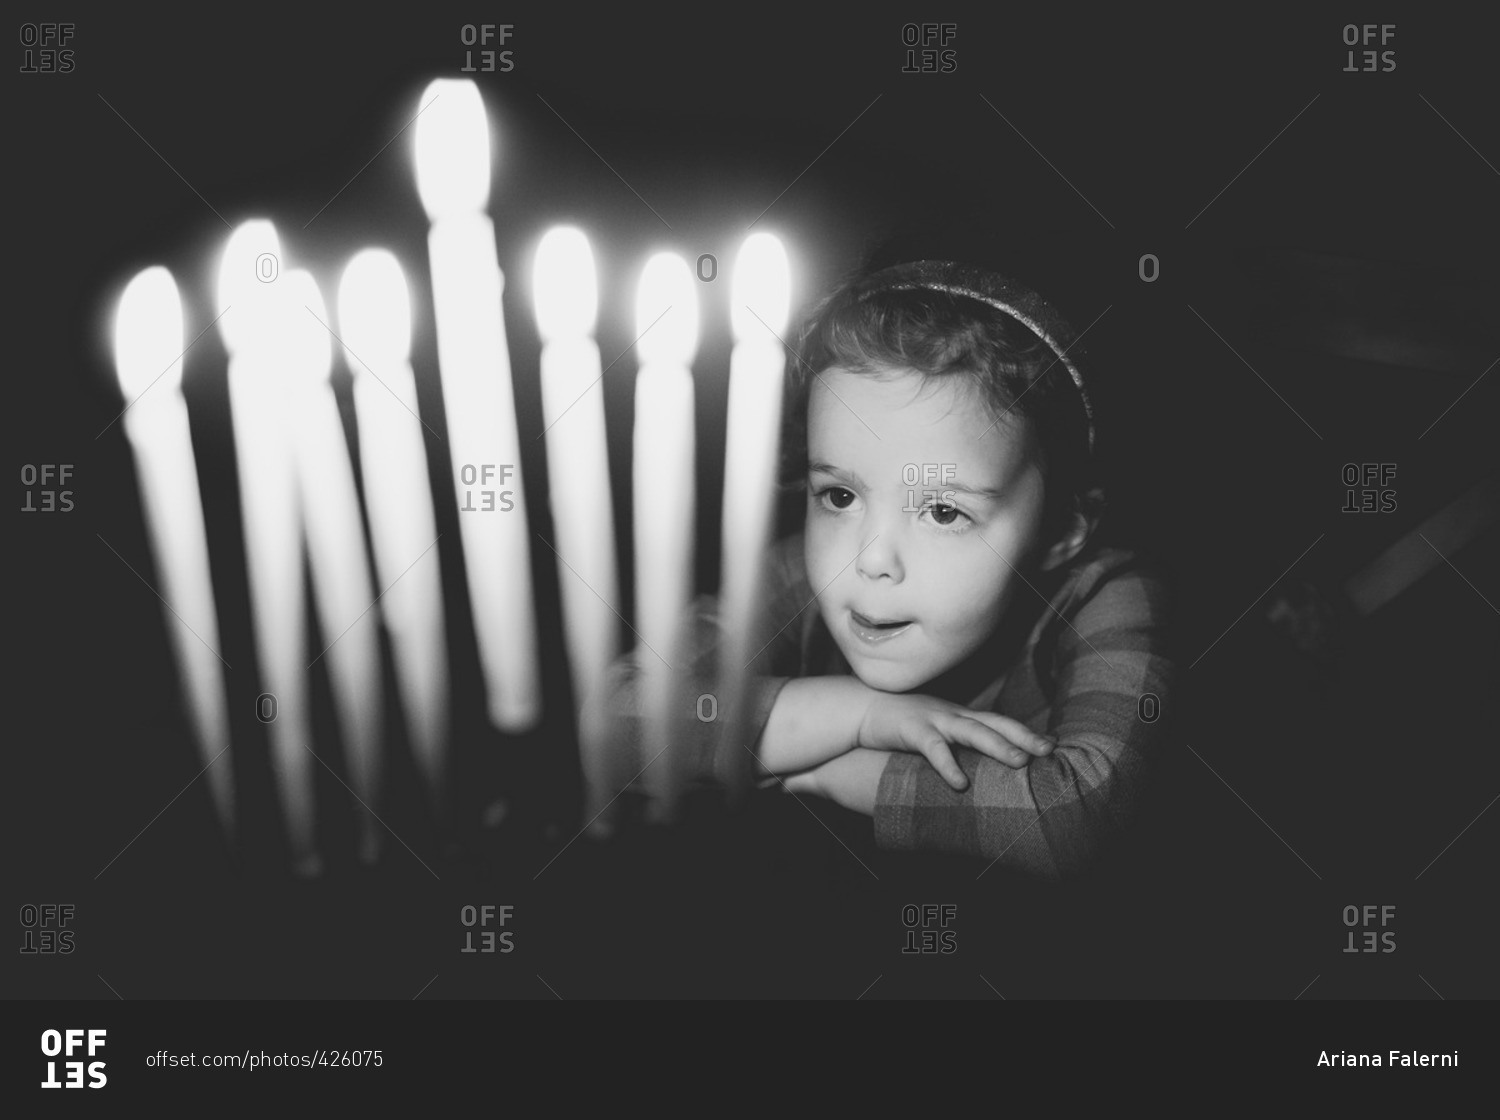 Girl gazing at lit candles on a menorah